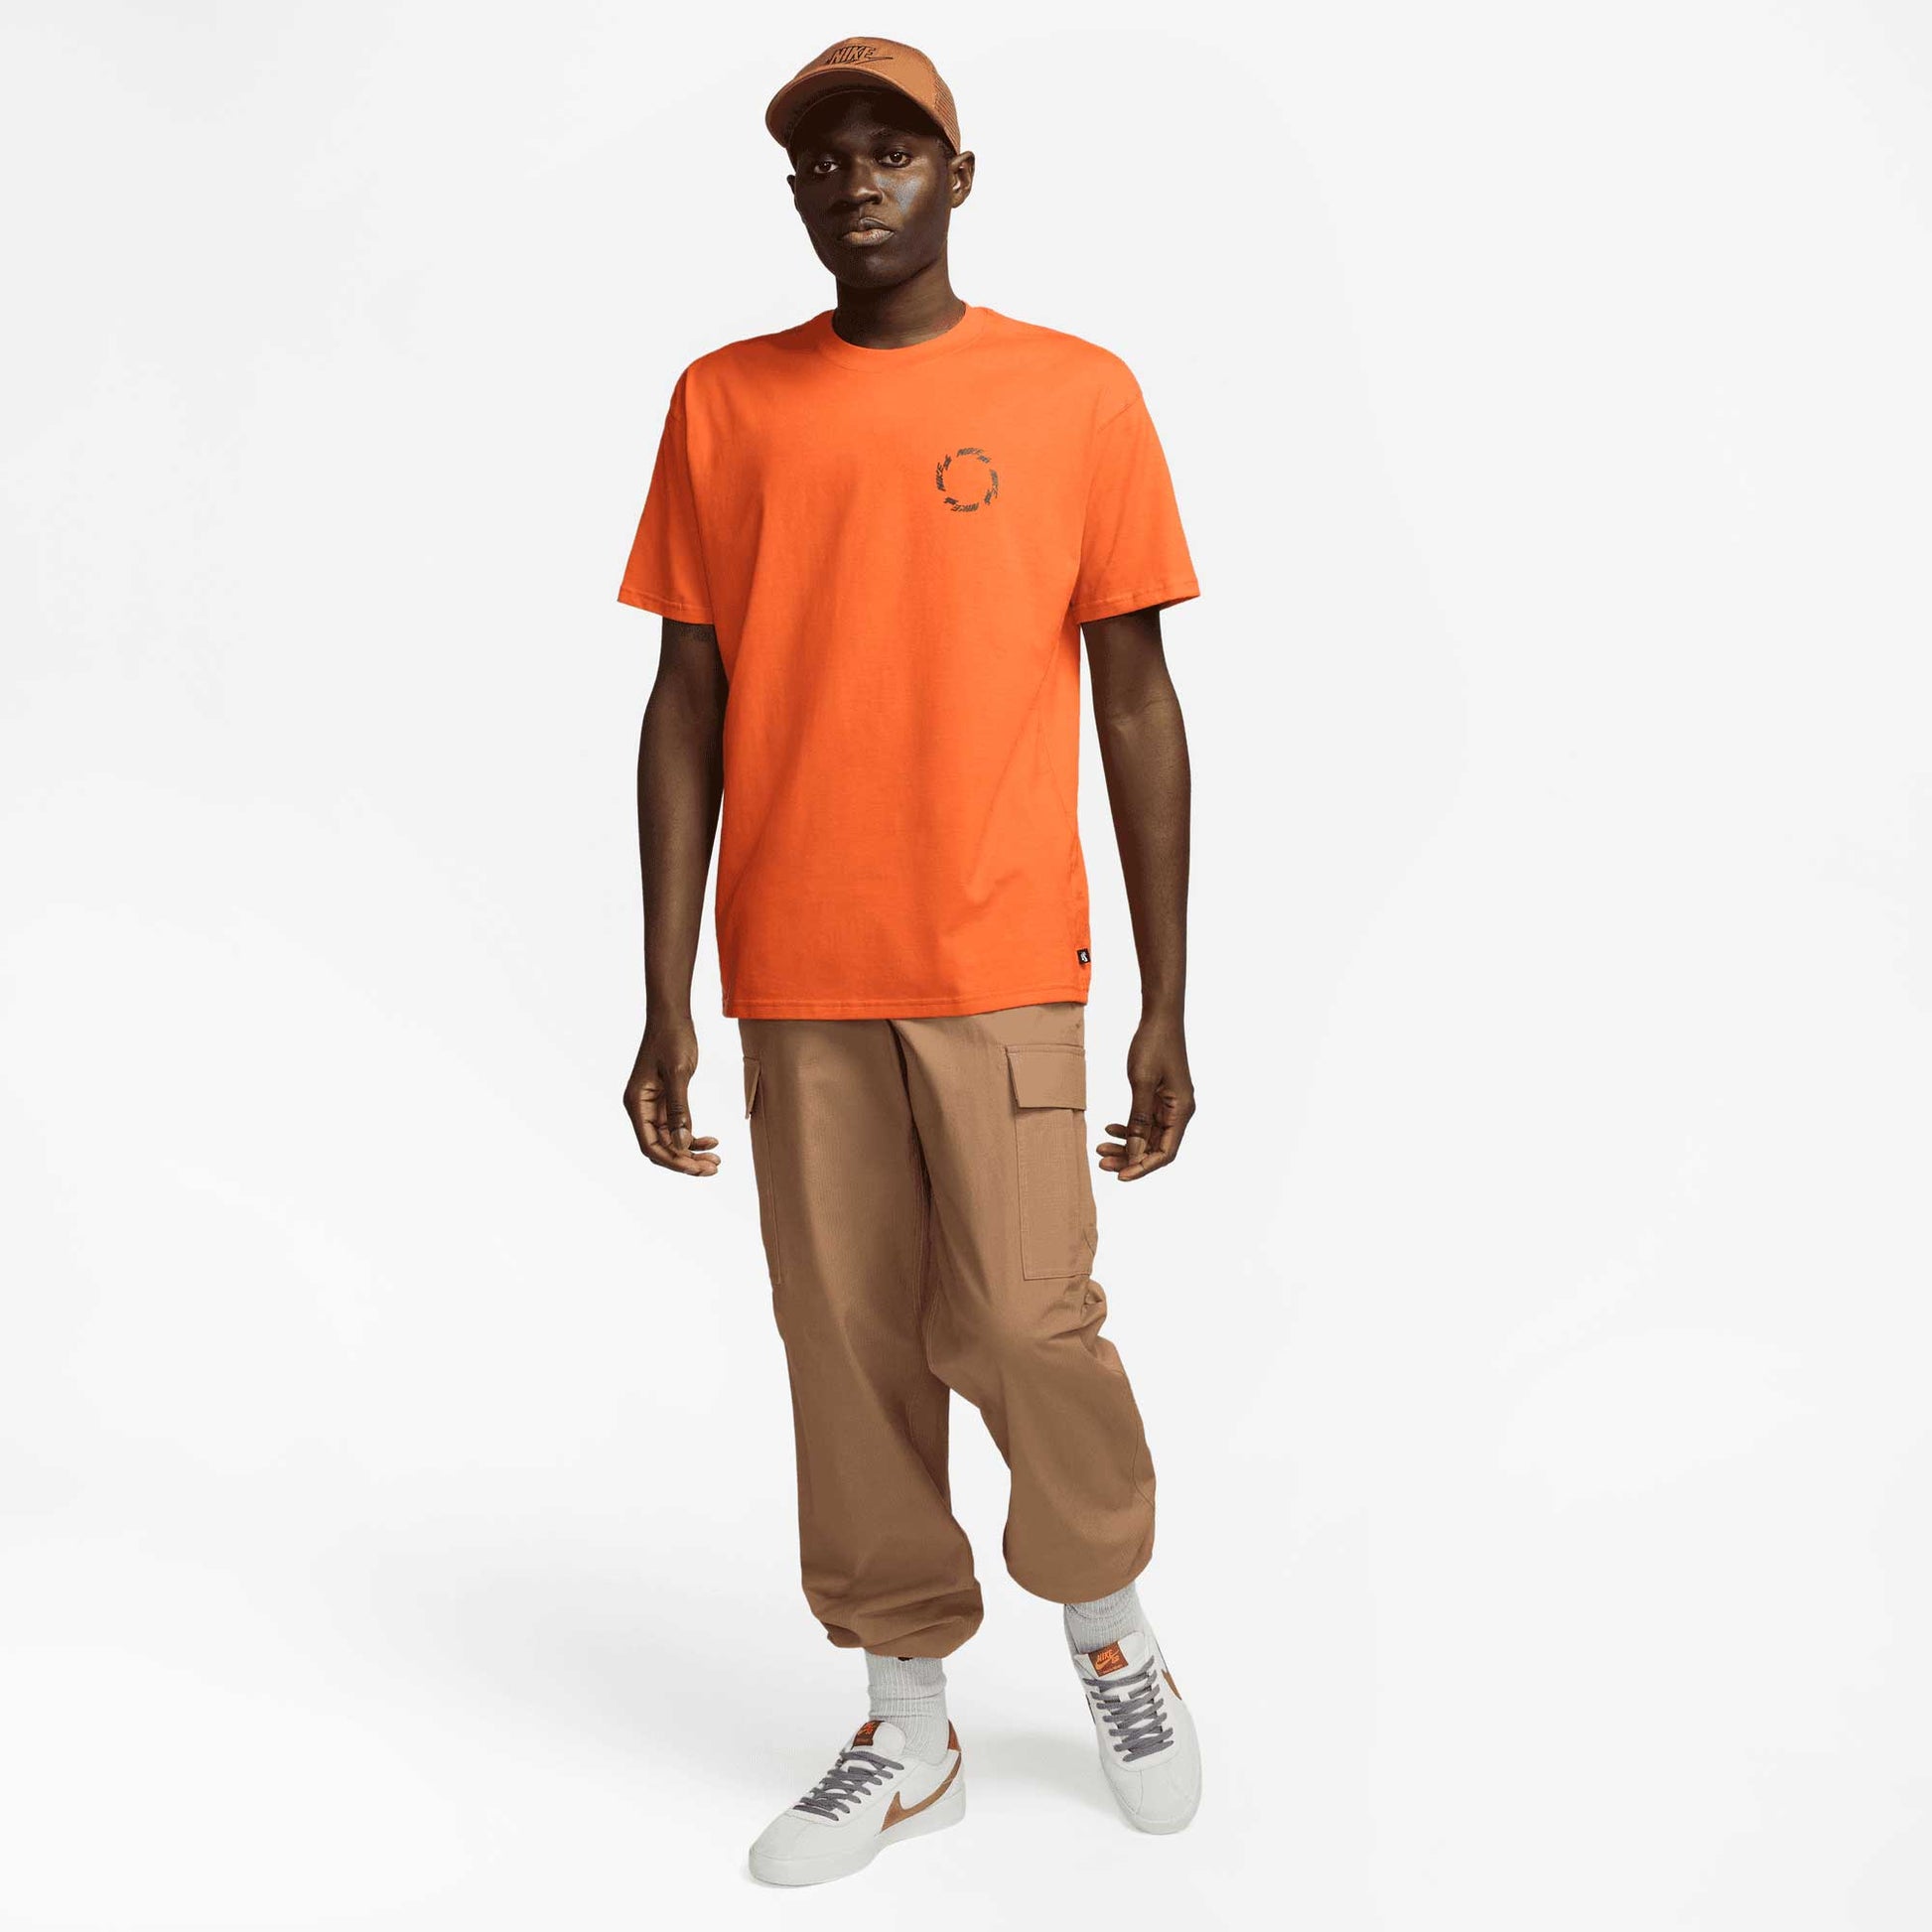 Nike SB Wheel T-Shirt, safety orange - Tiki Room Skateboards - 7